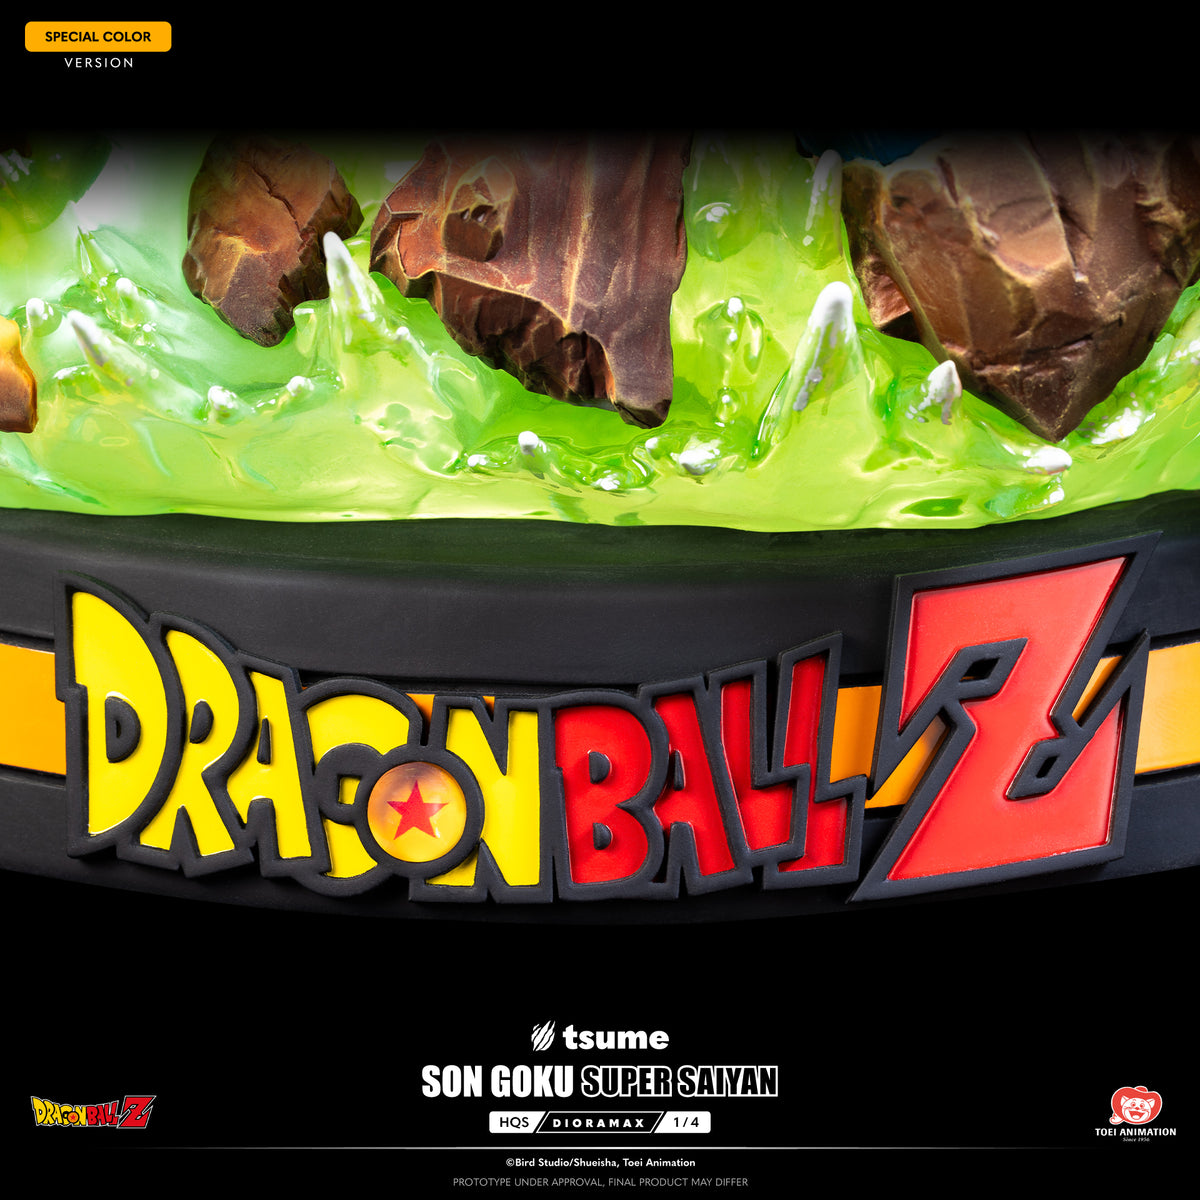 [PREORDER] HQS Dioramax Son Goku Super Saiyan - Special Edition